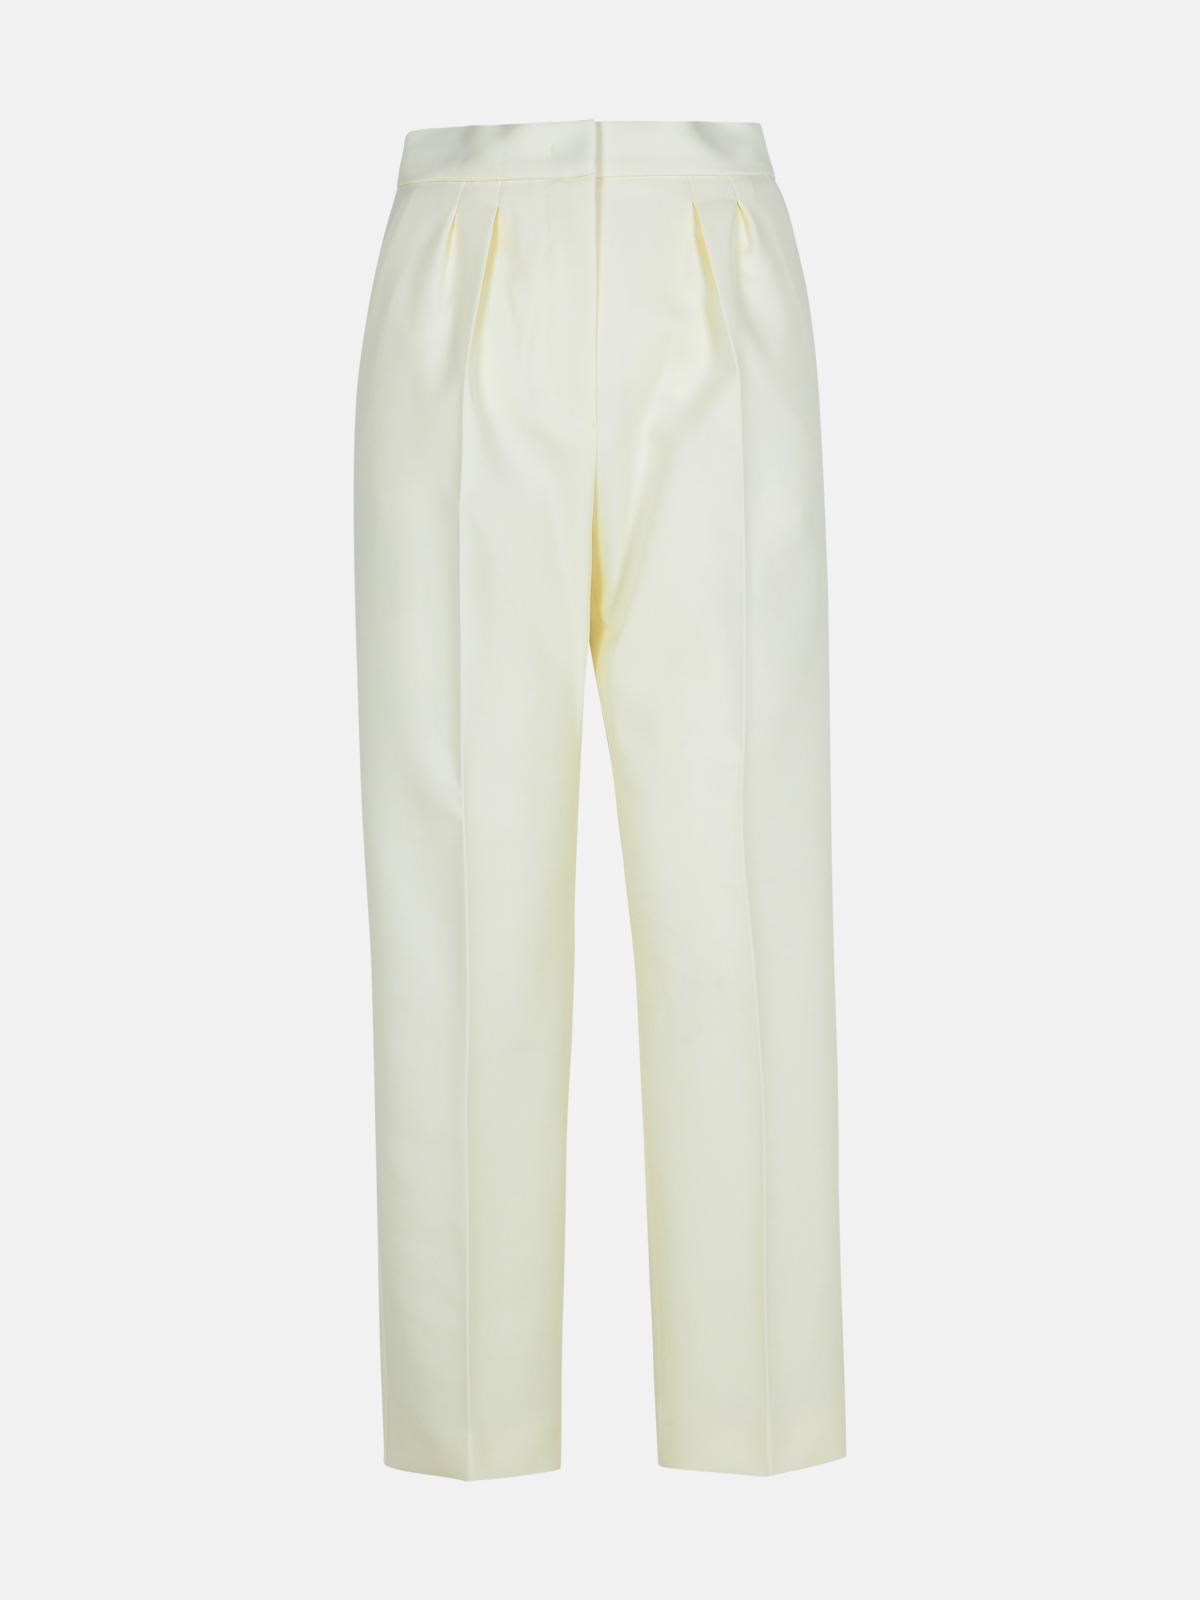 Max Mara 'verbano' White Virgin Wool Pants